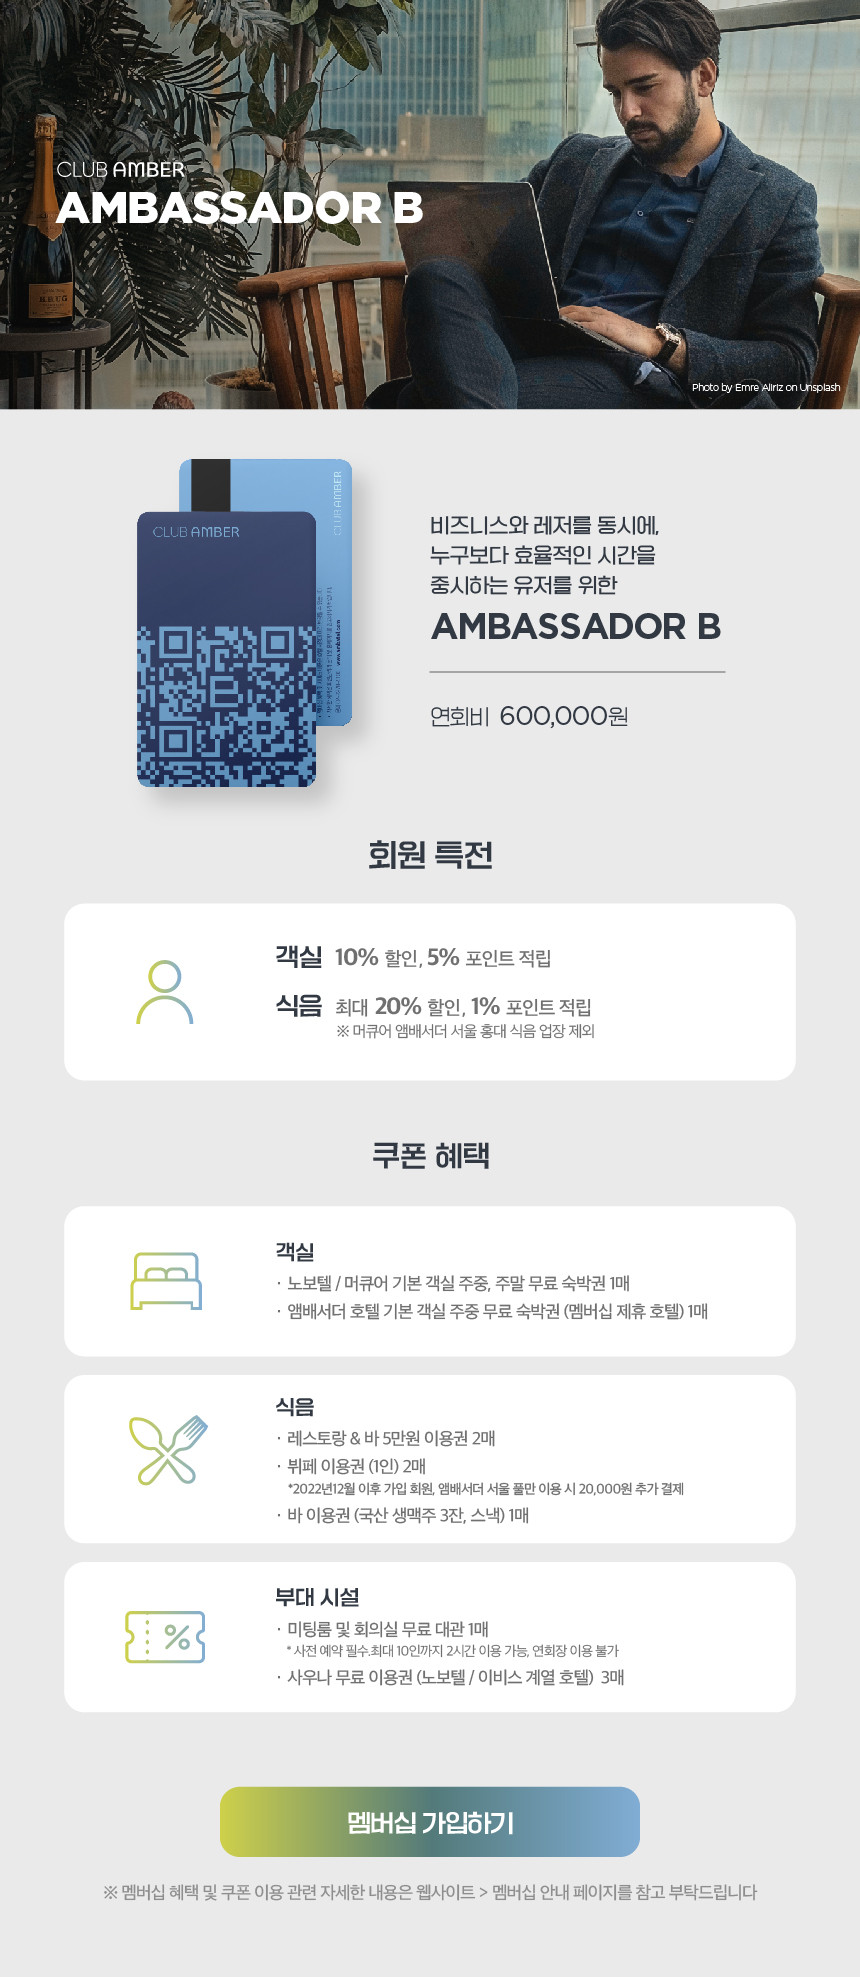 Ambassador B